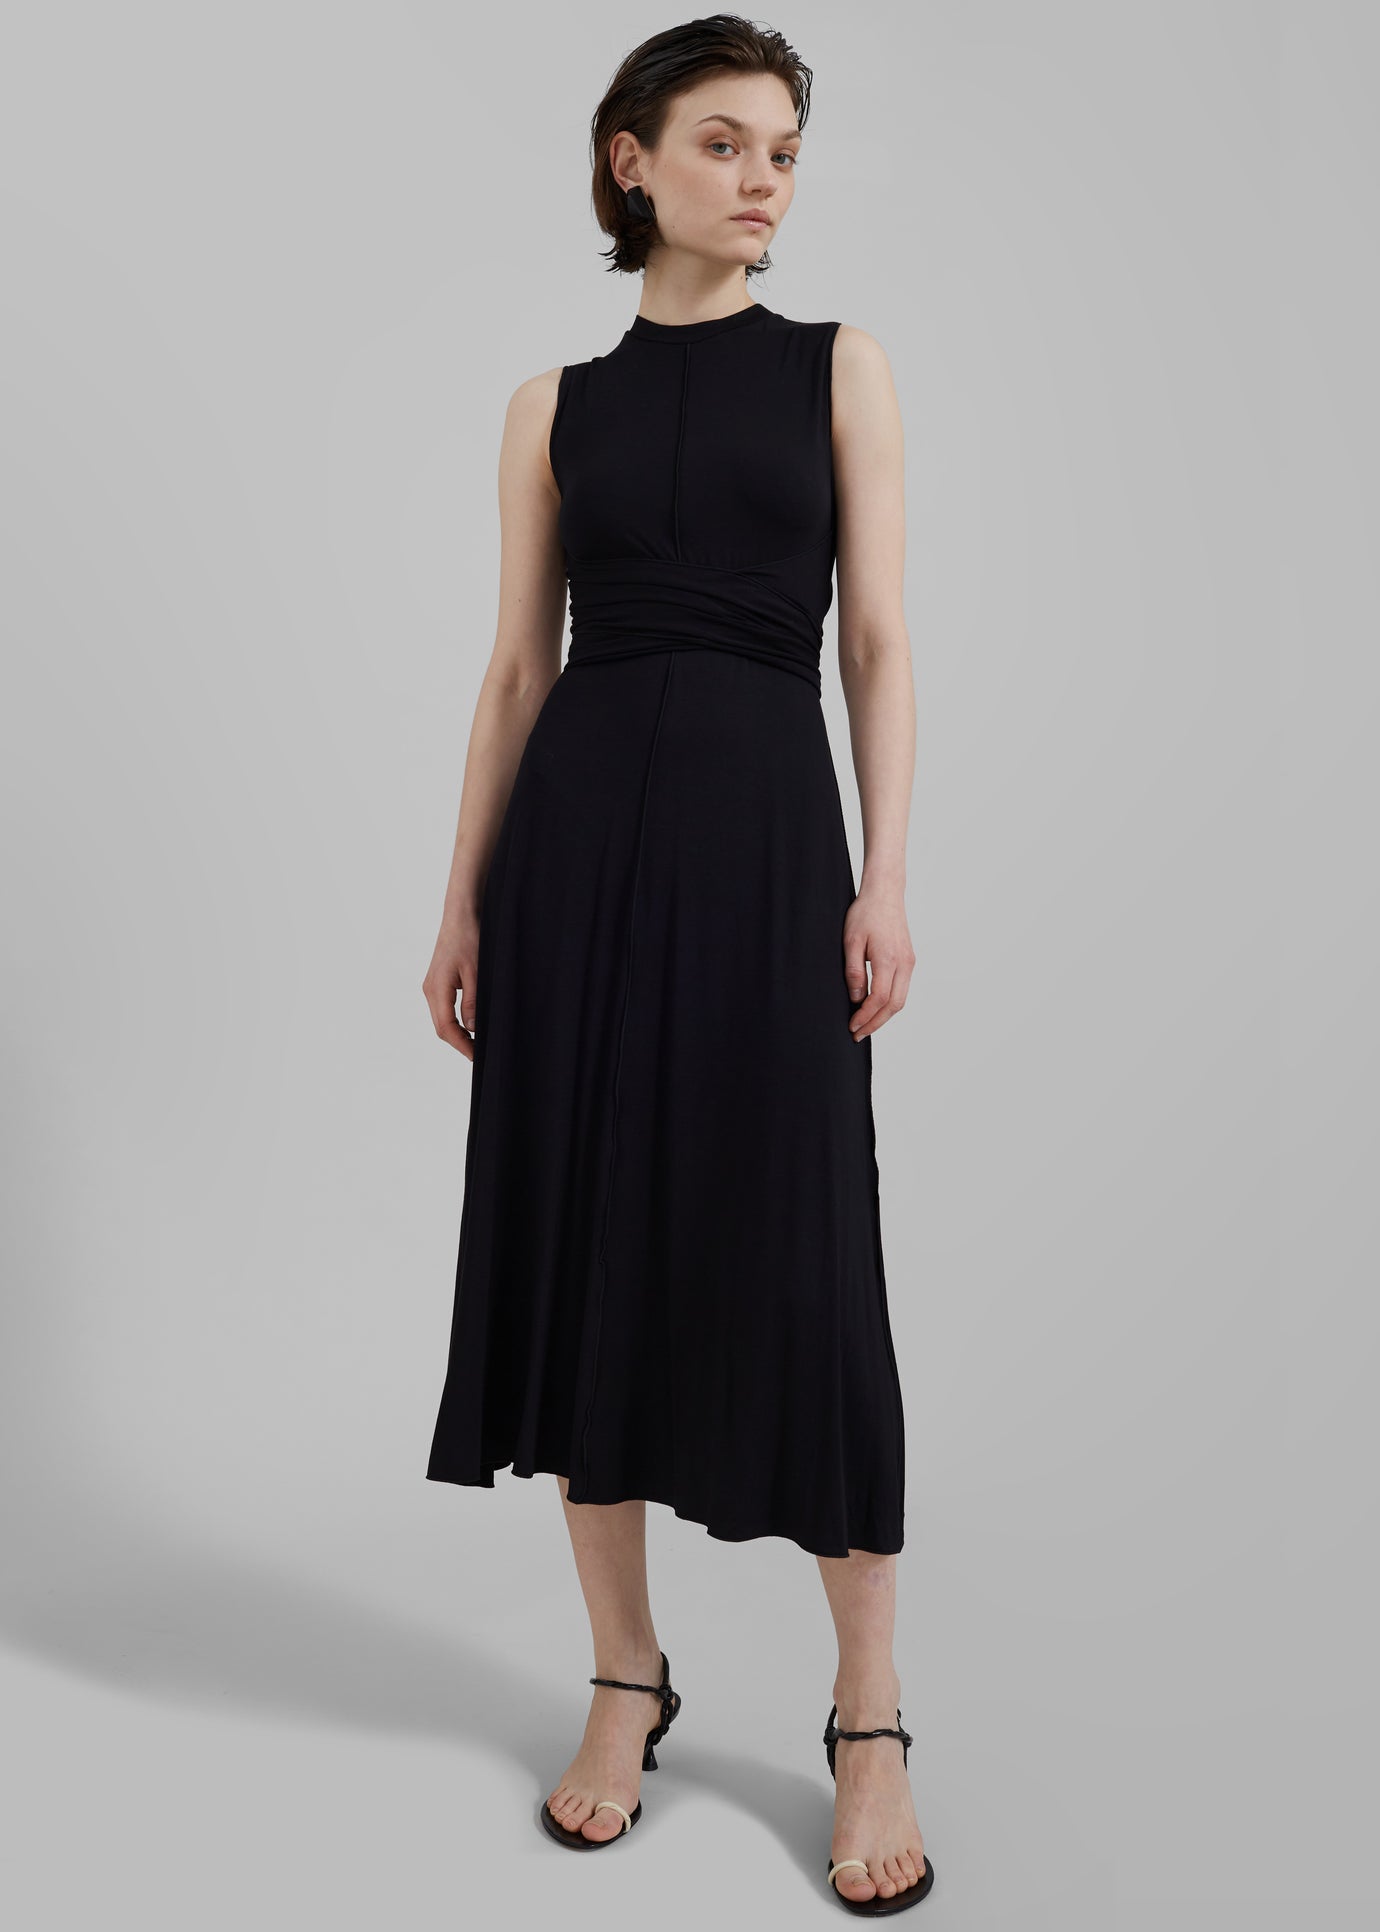 Proenza Schouler White Label Beatrice Dress - Black